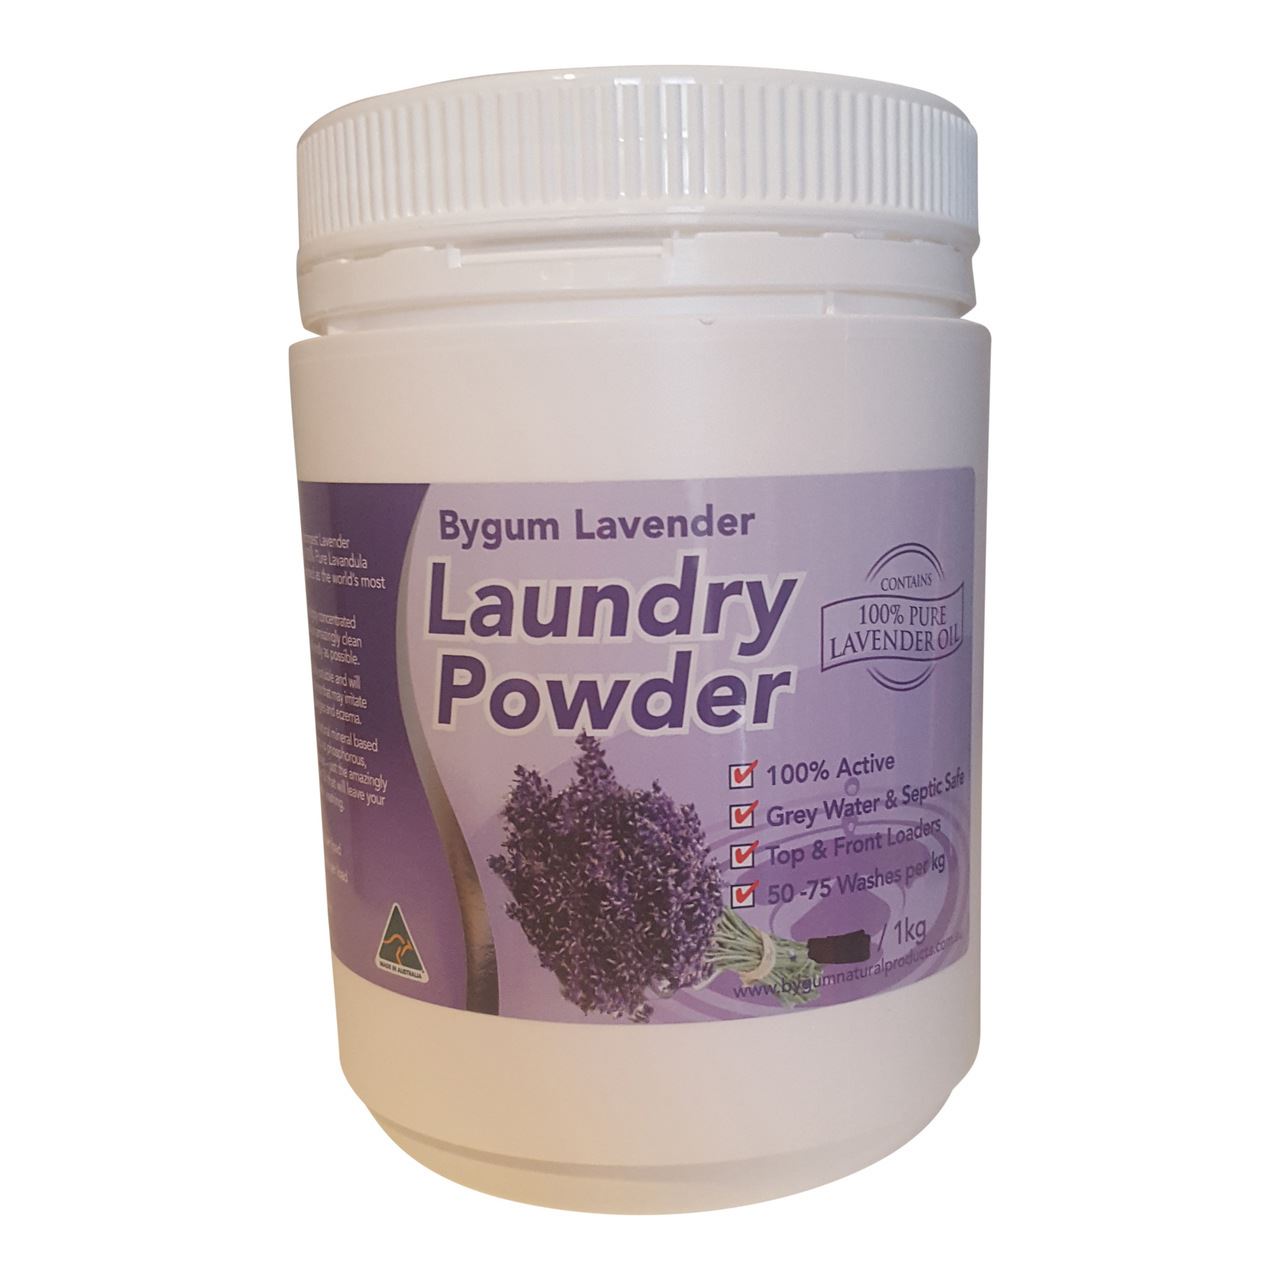 Bygum Lavender Laundry Powder 1kg